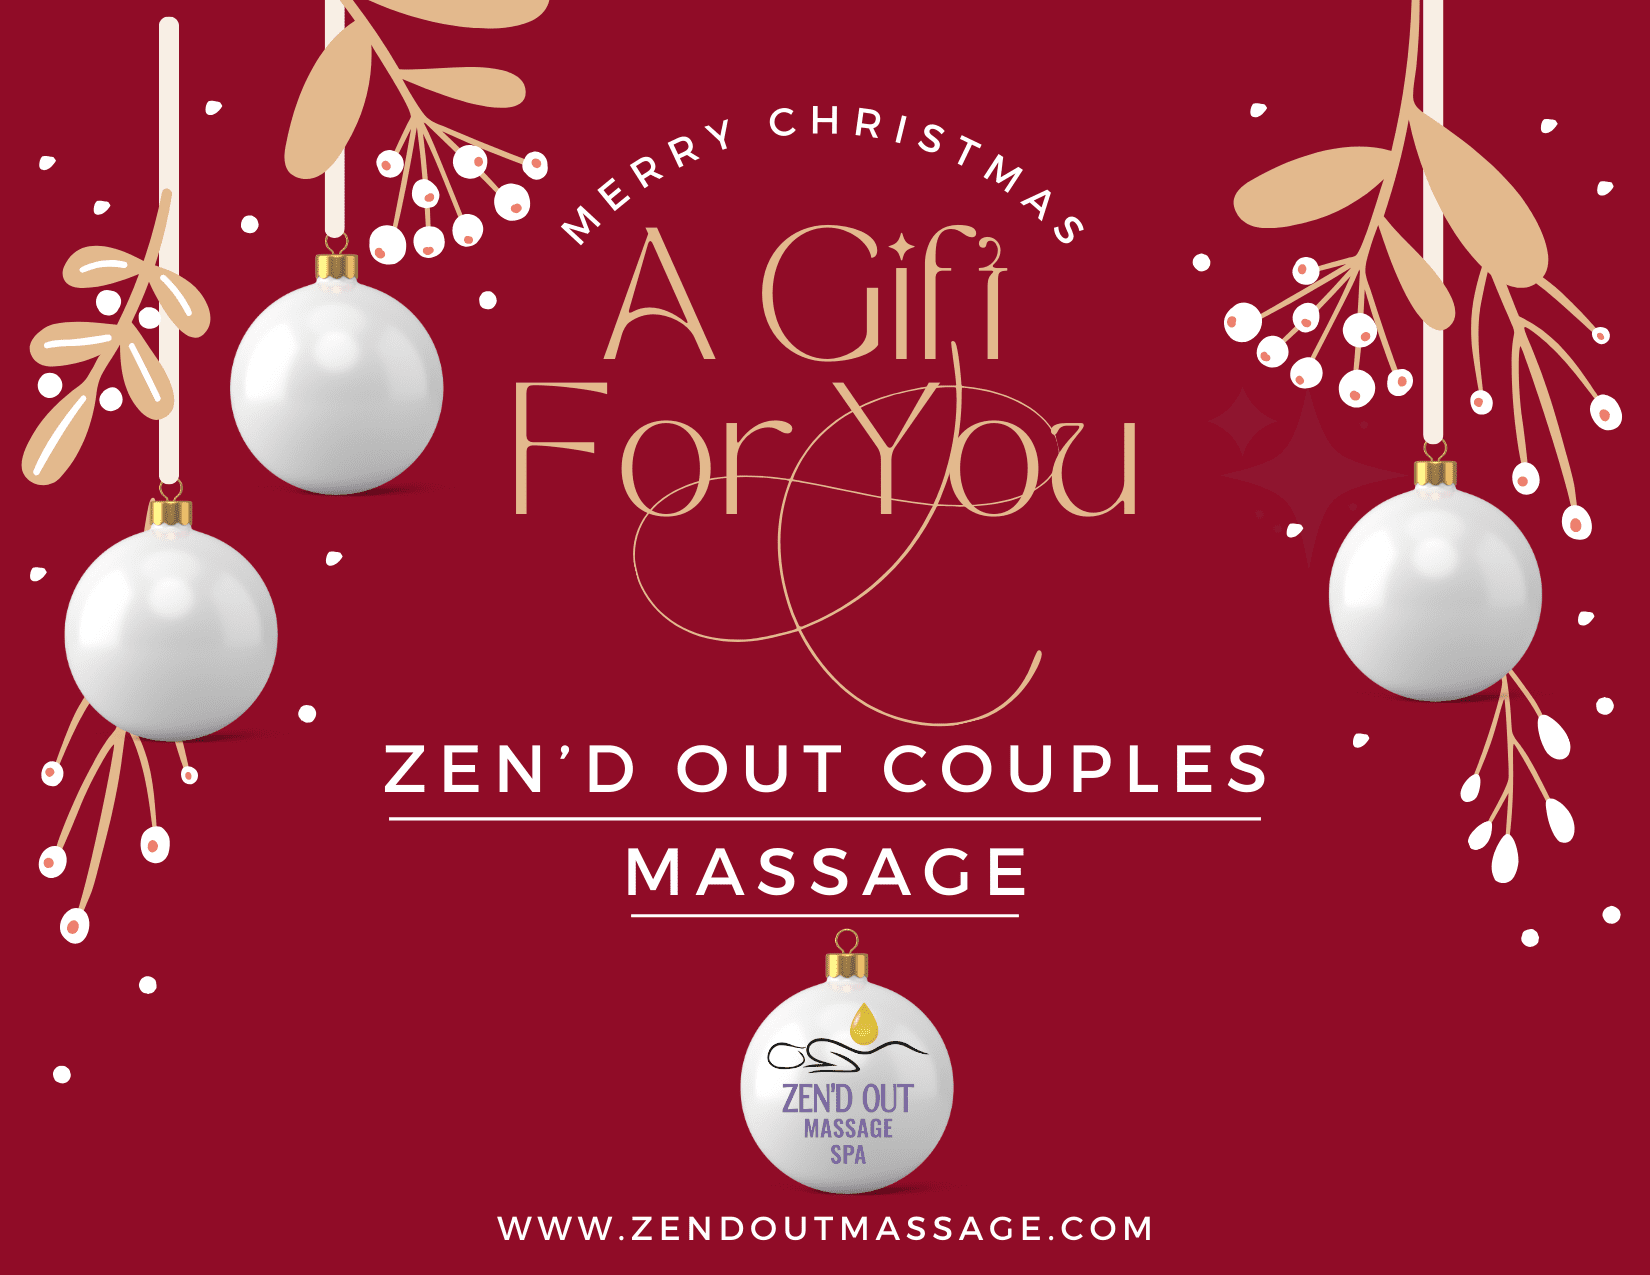 Zen'd Out Couples Massage Spa Gift Card